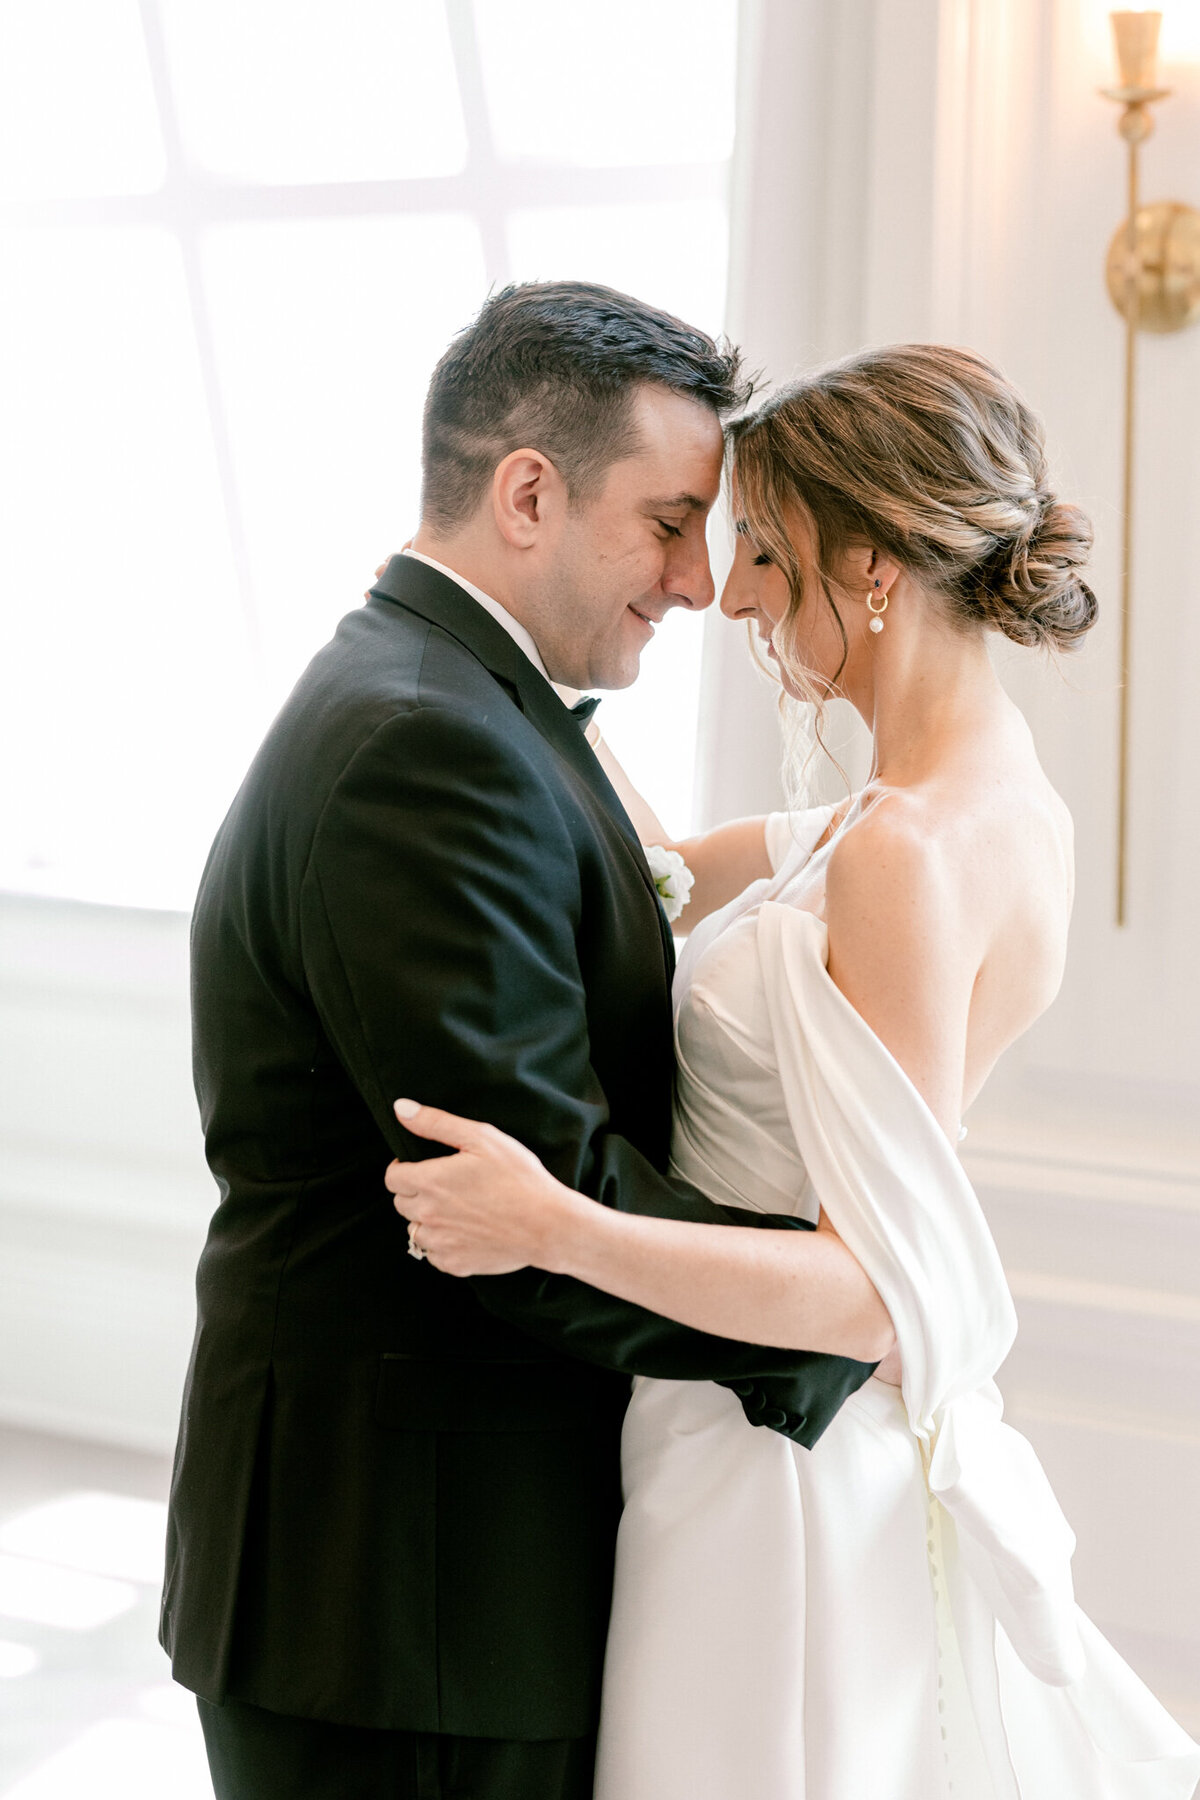 Virginia & Michael's Wedding at the Adolphus Hotel | Dallas Wedding Photographer | Sami Kathryn Photography-3